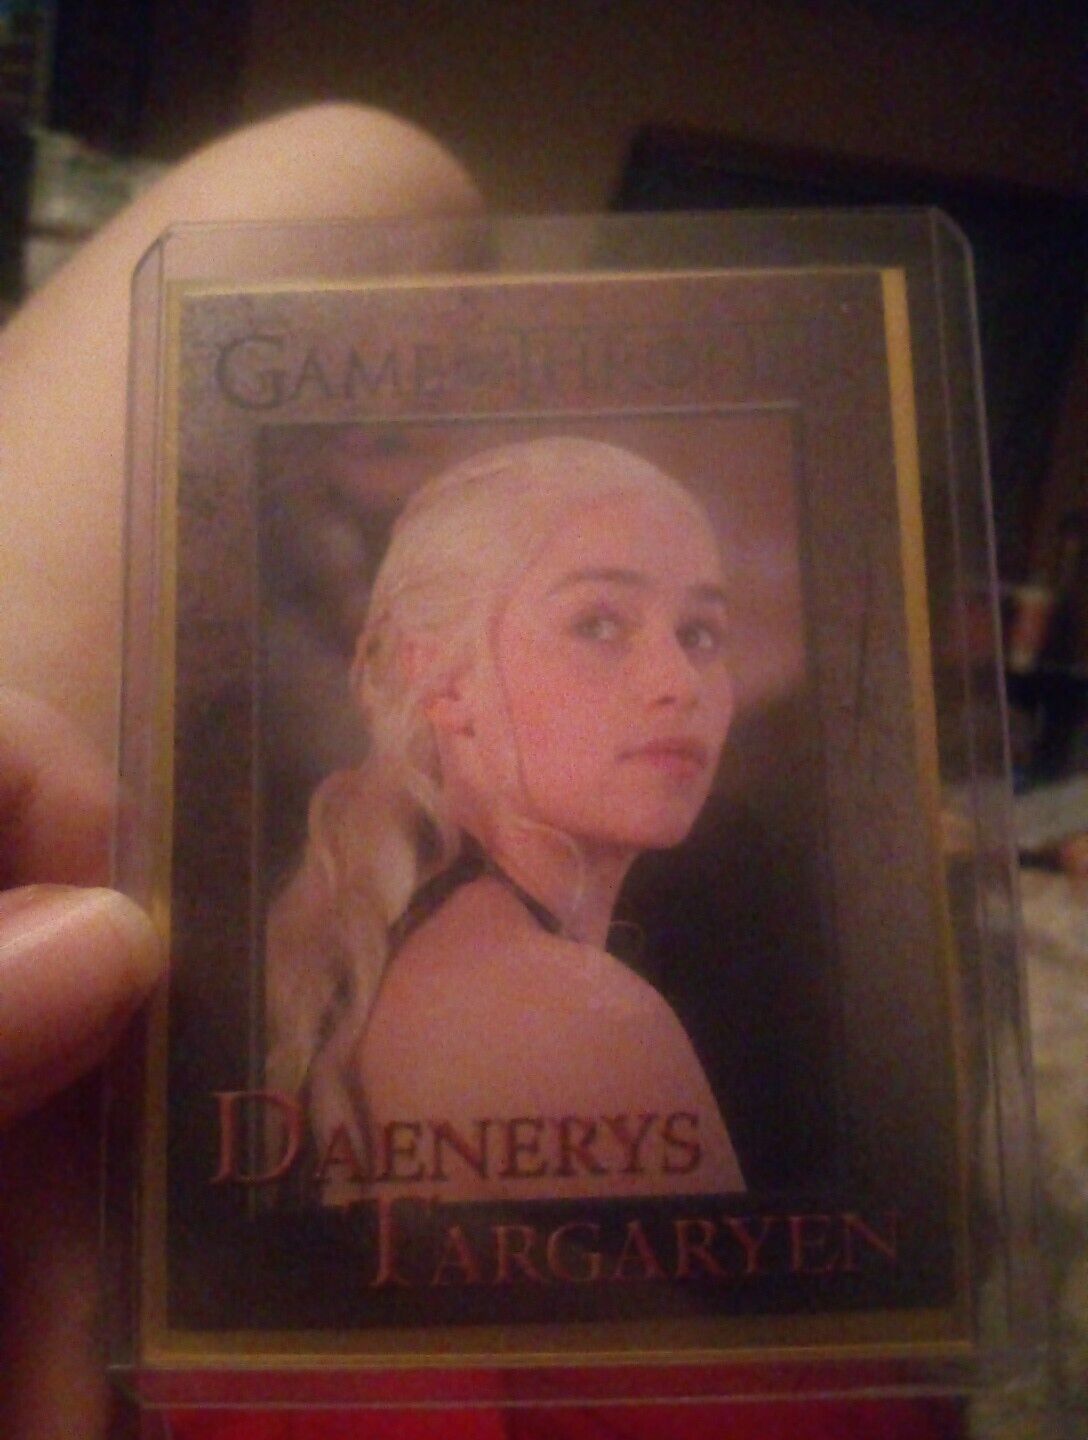 2014 Game of Thrones Season 3 DAENERYS TARGARYEN #48 Emilia Clarke QTY